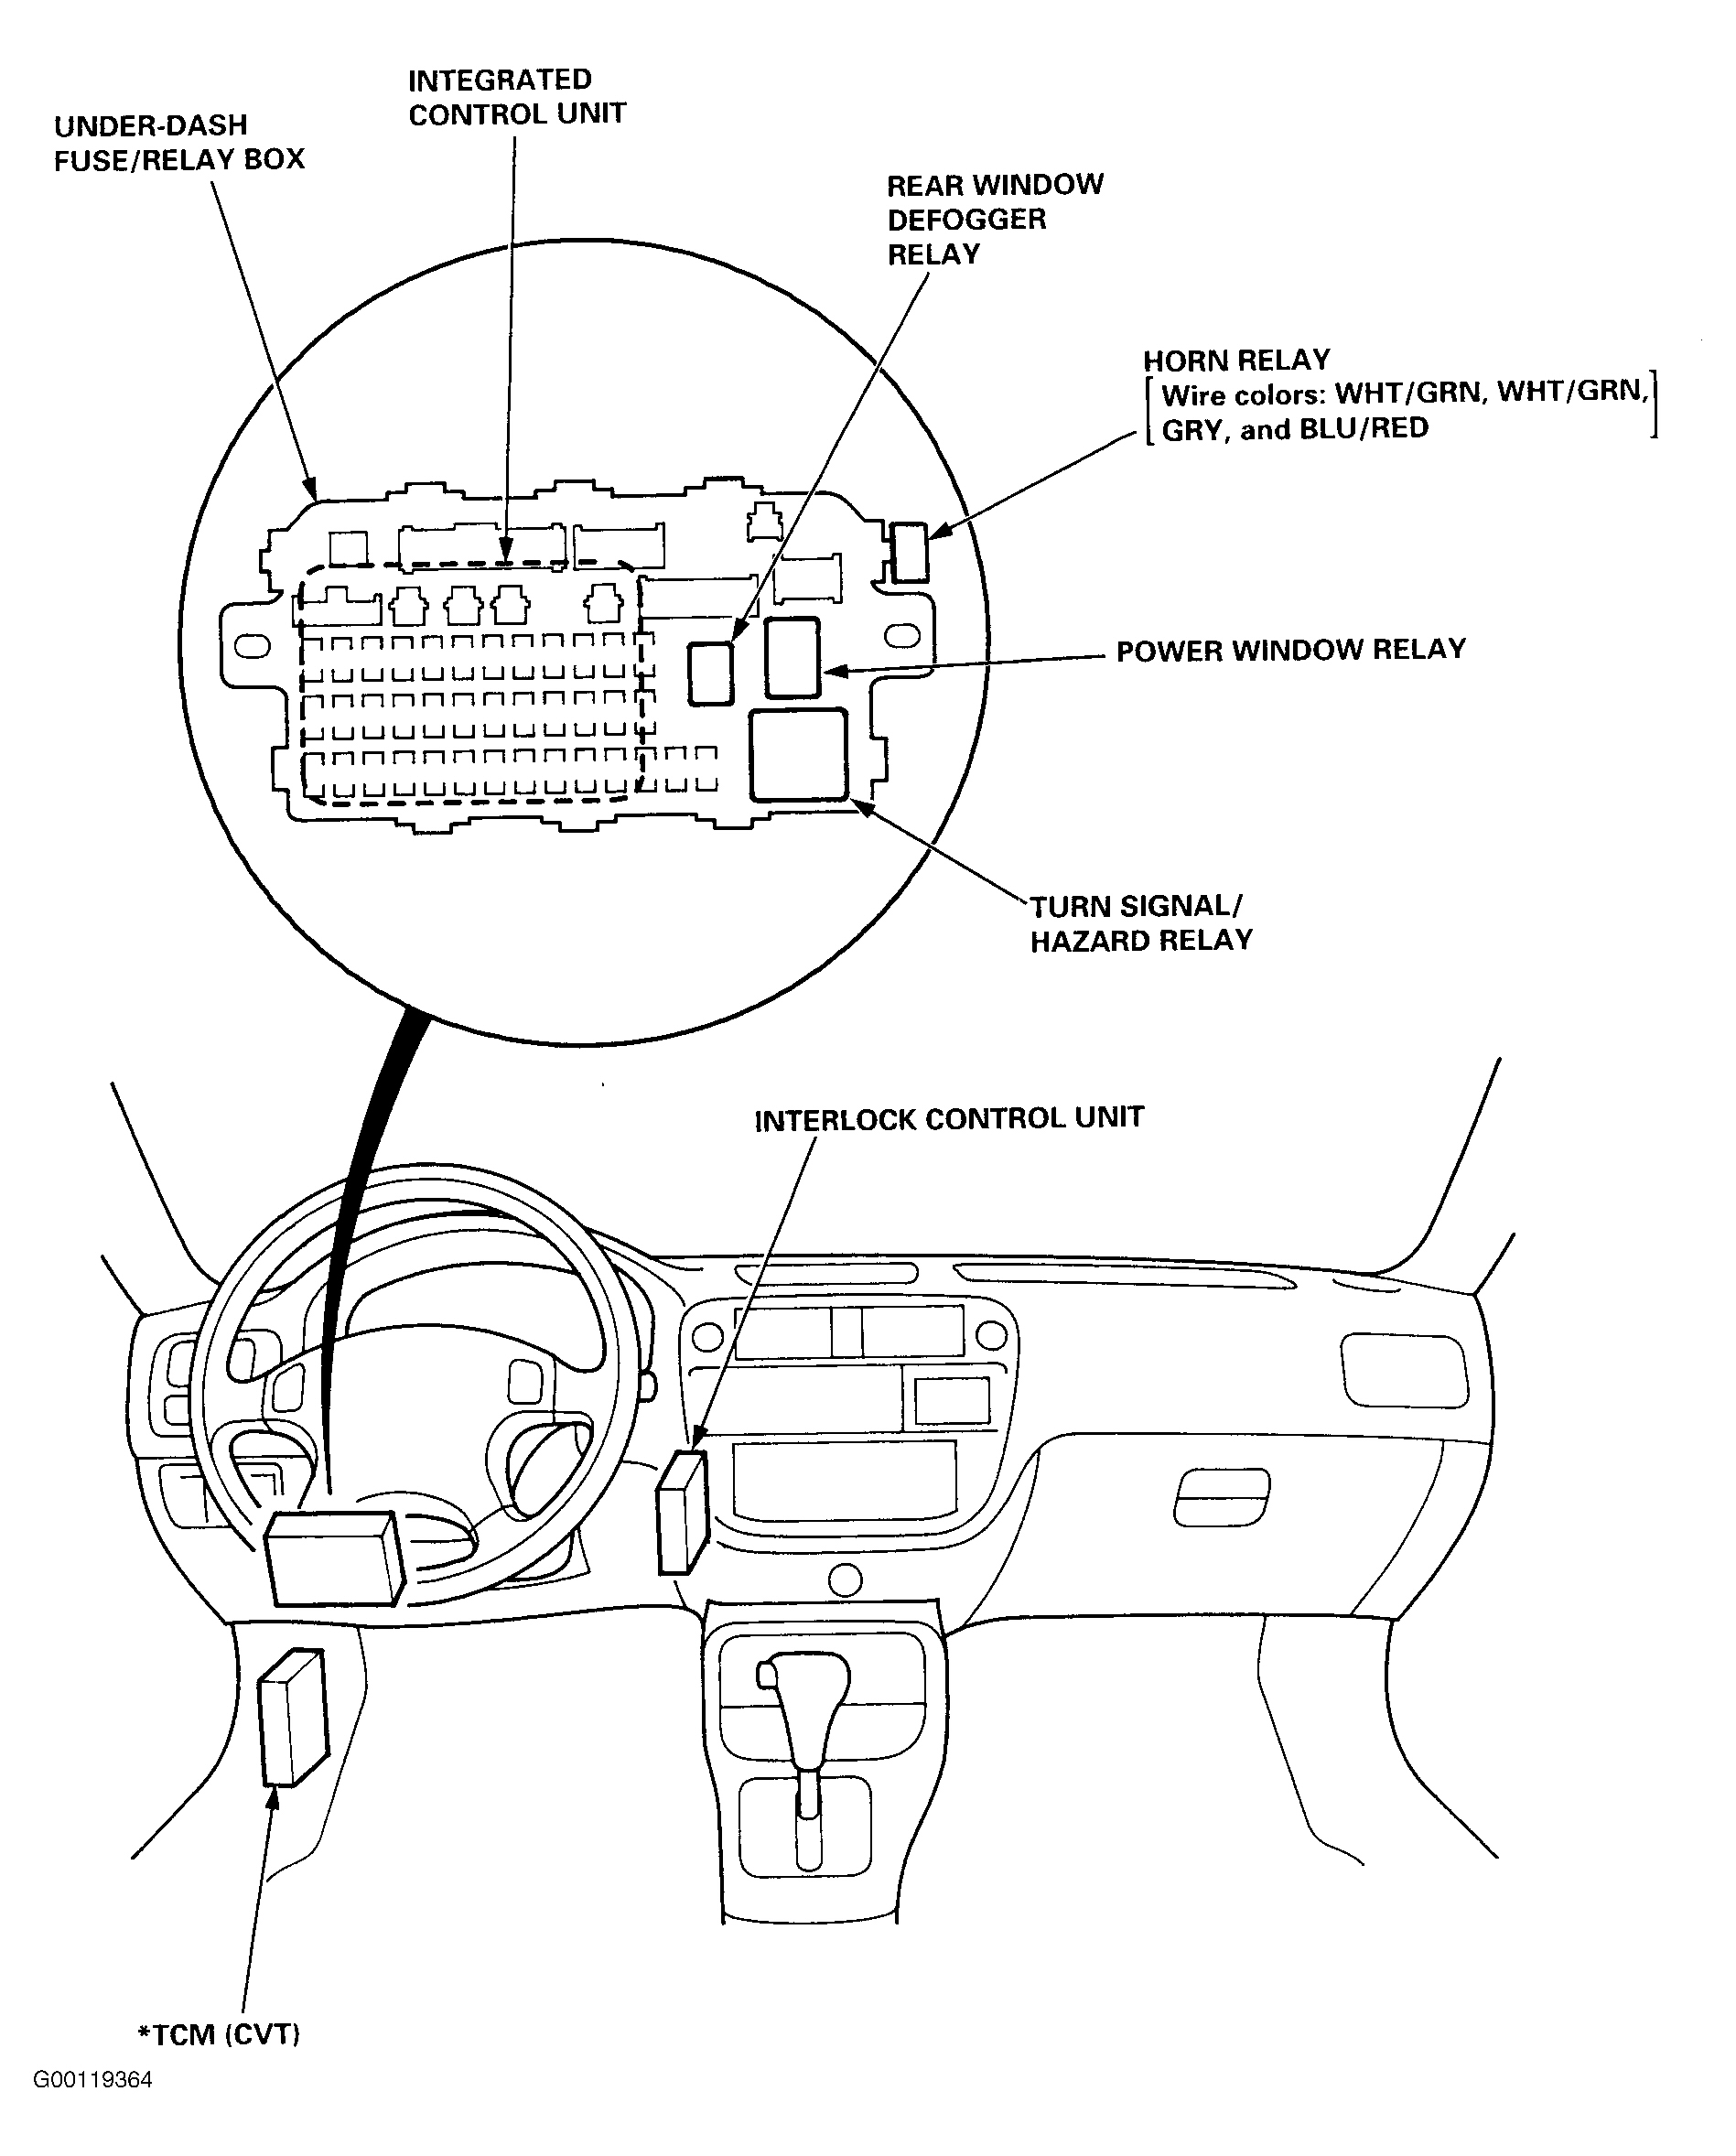 Honda Civic EX 2000 - Component Locations -  Locating Under-Dash Fuse/Relay Box (1996-97)